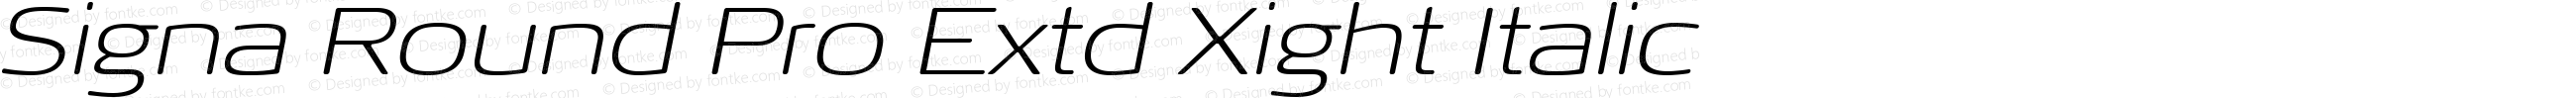 Signa Round Pro Extd Xlight Italic